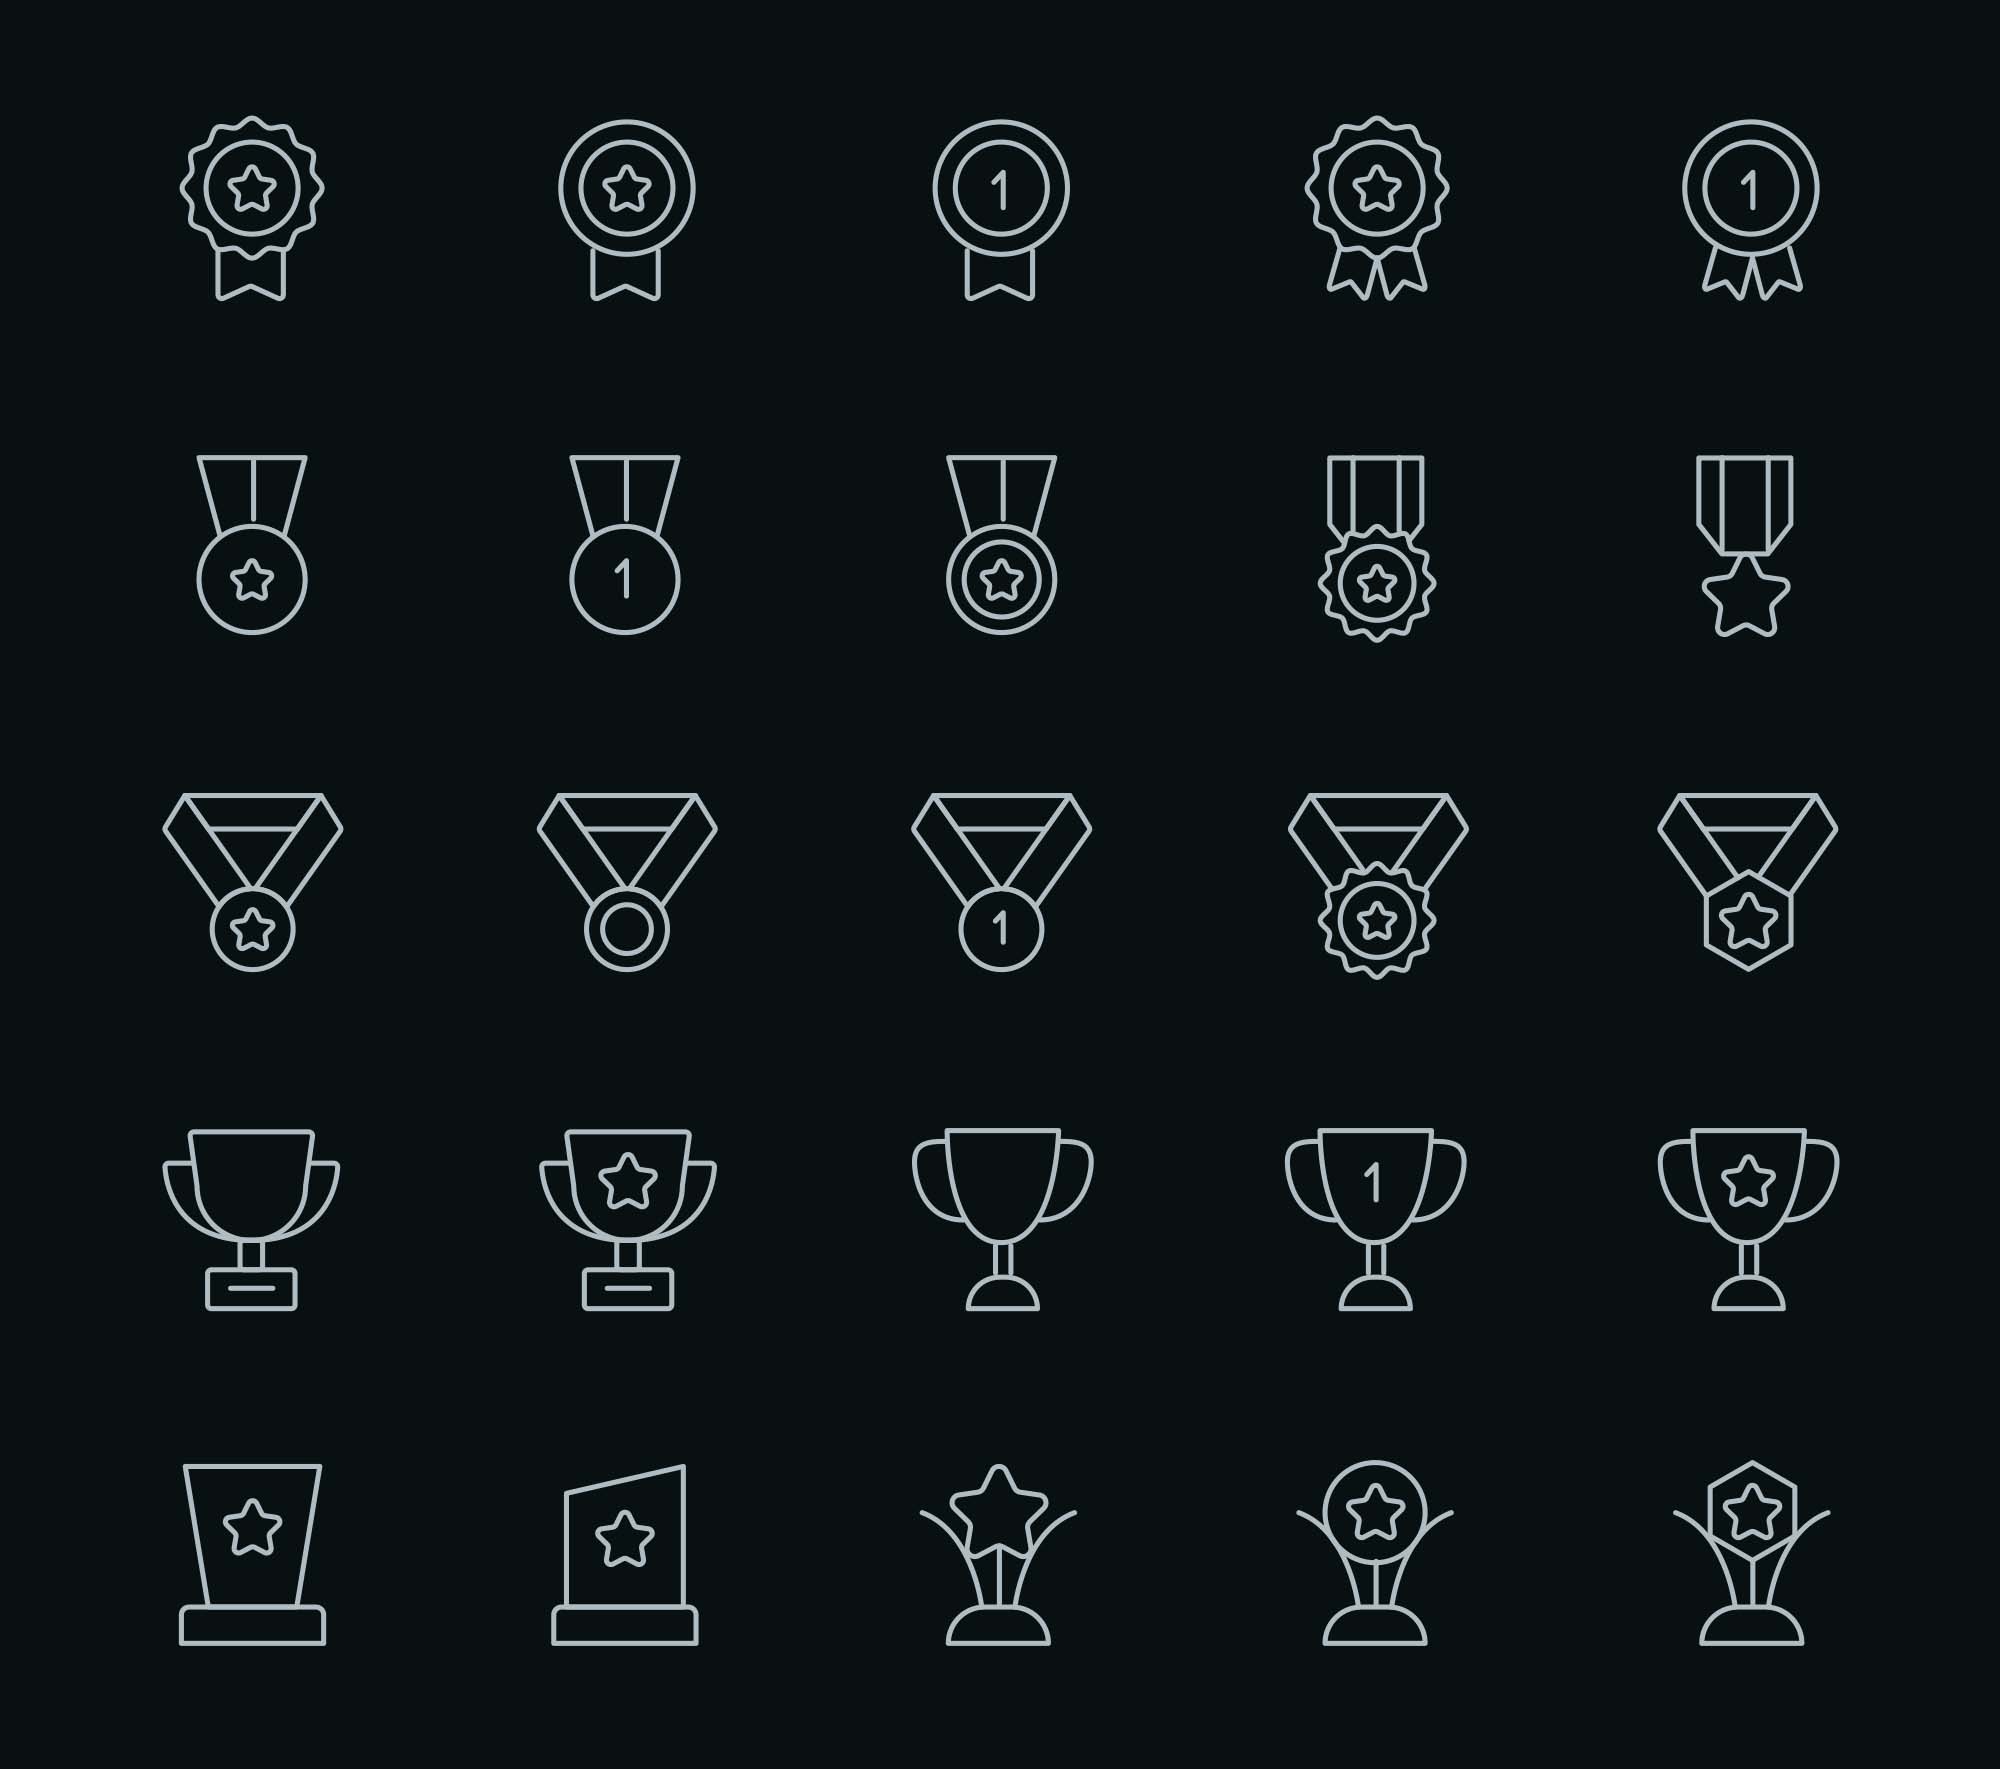 25枚奖章奖杯矢量图标素材 25 Vector Reward Icons插图(1)